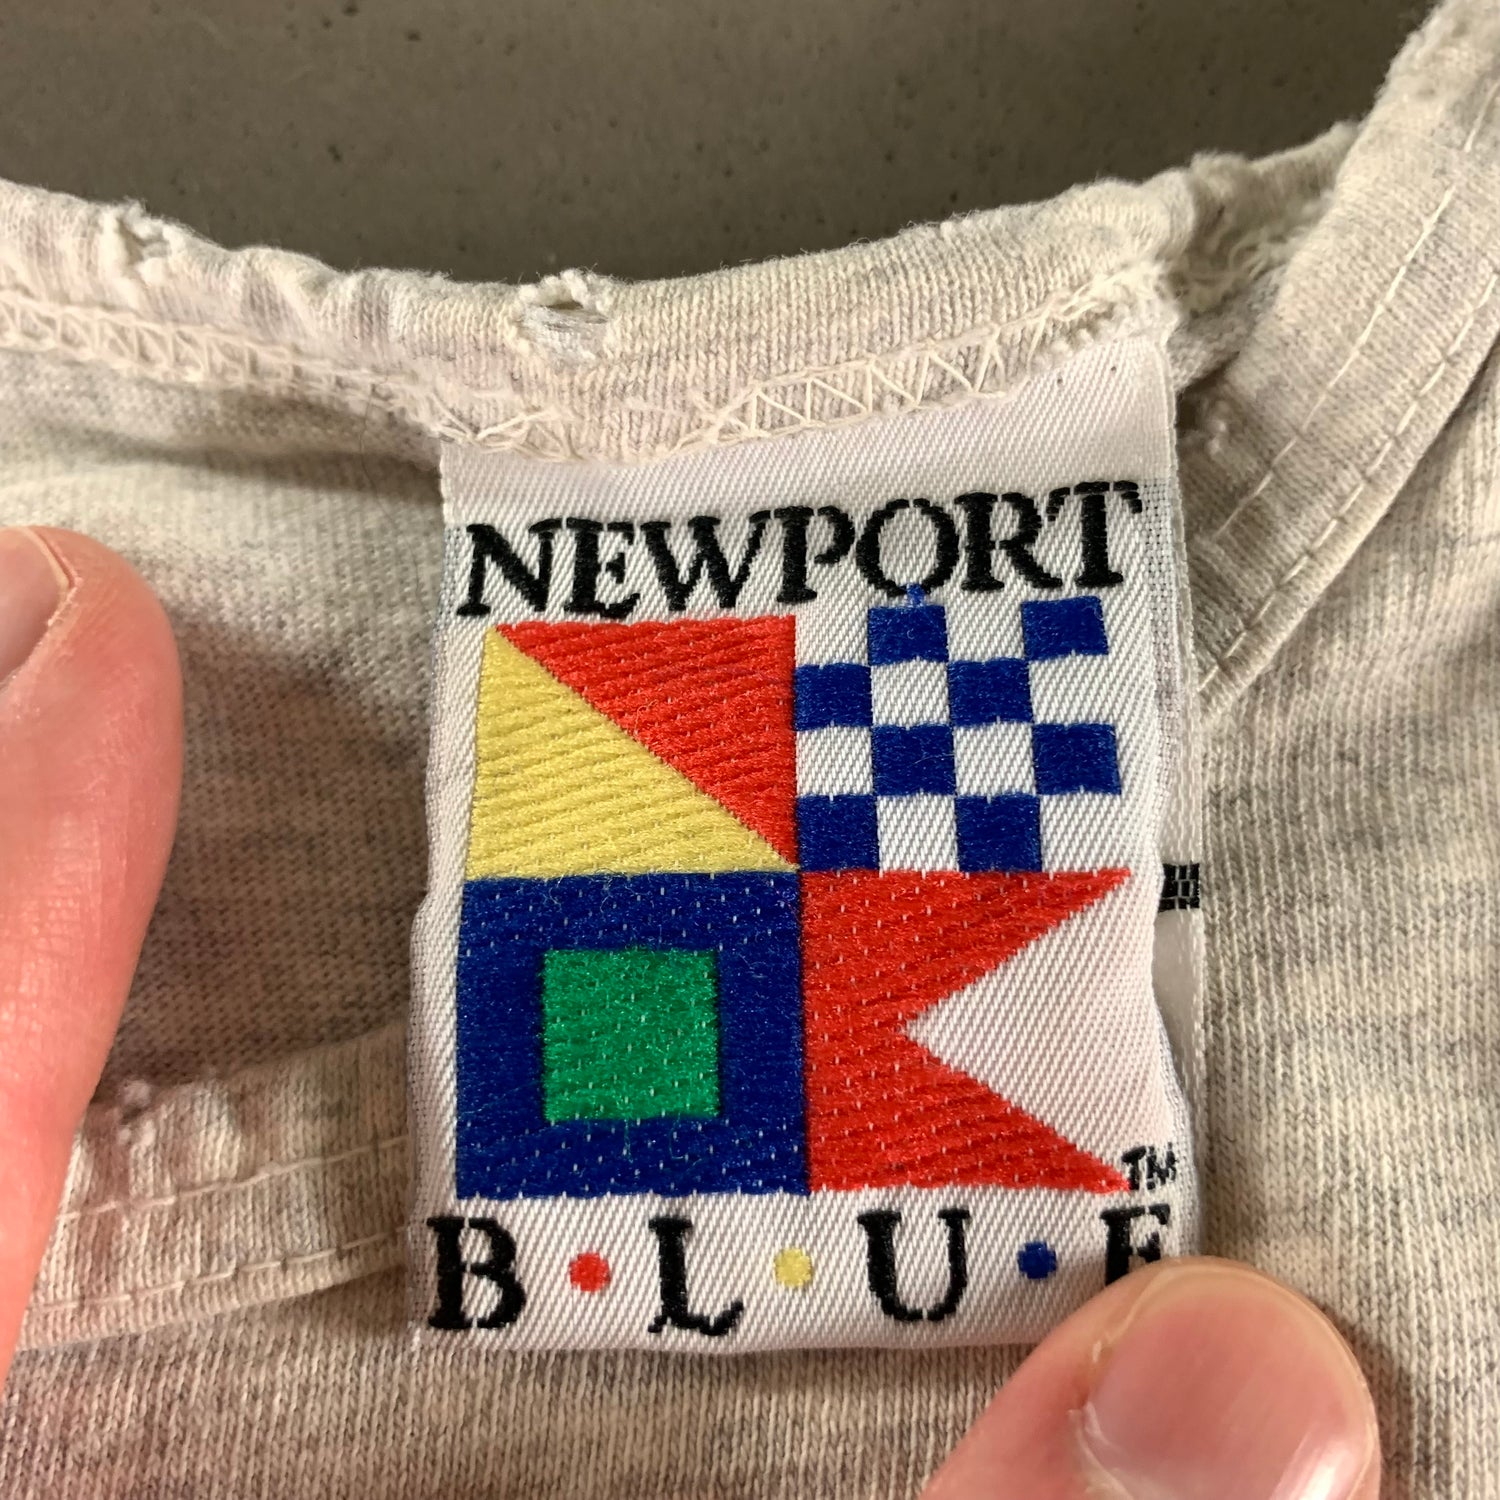 Vintage 1990s New Port Blue T-shirt size Large